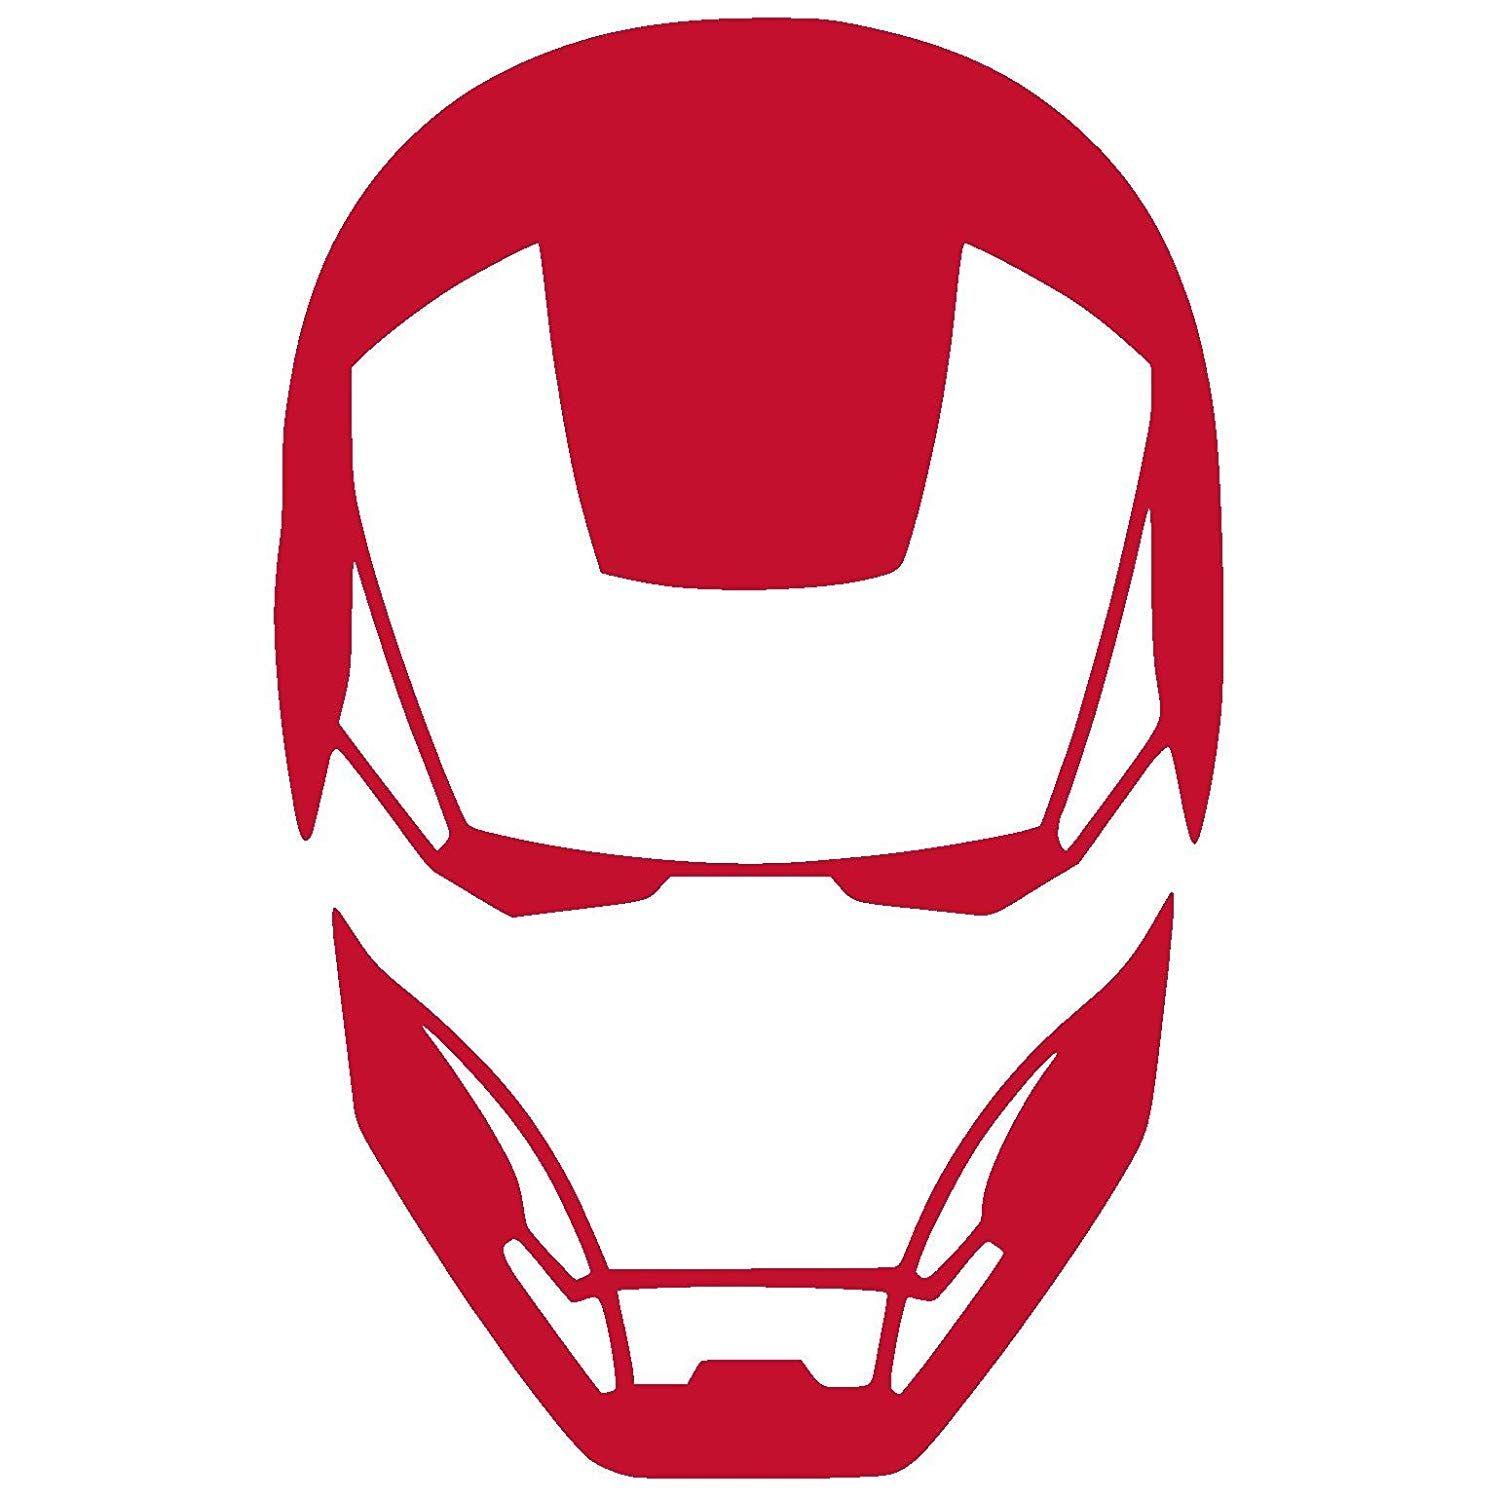 Red Man Face Logo - Amazon.com: IRON MAN FACE Vinyl Sticker Decal: Sports & Outdoors